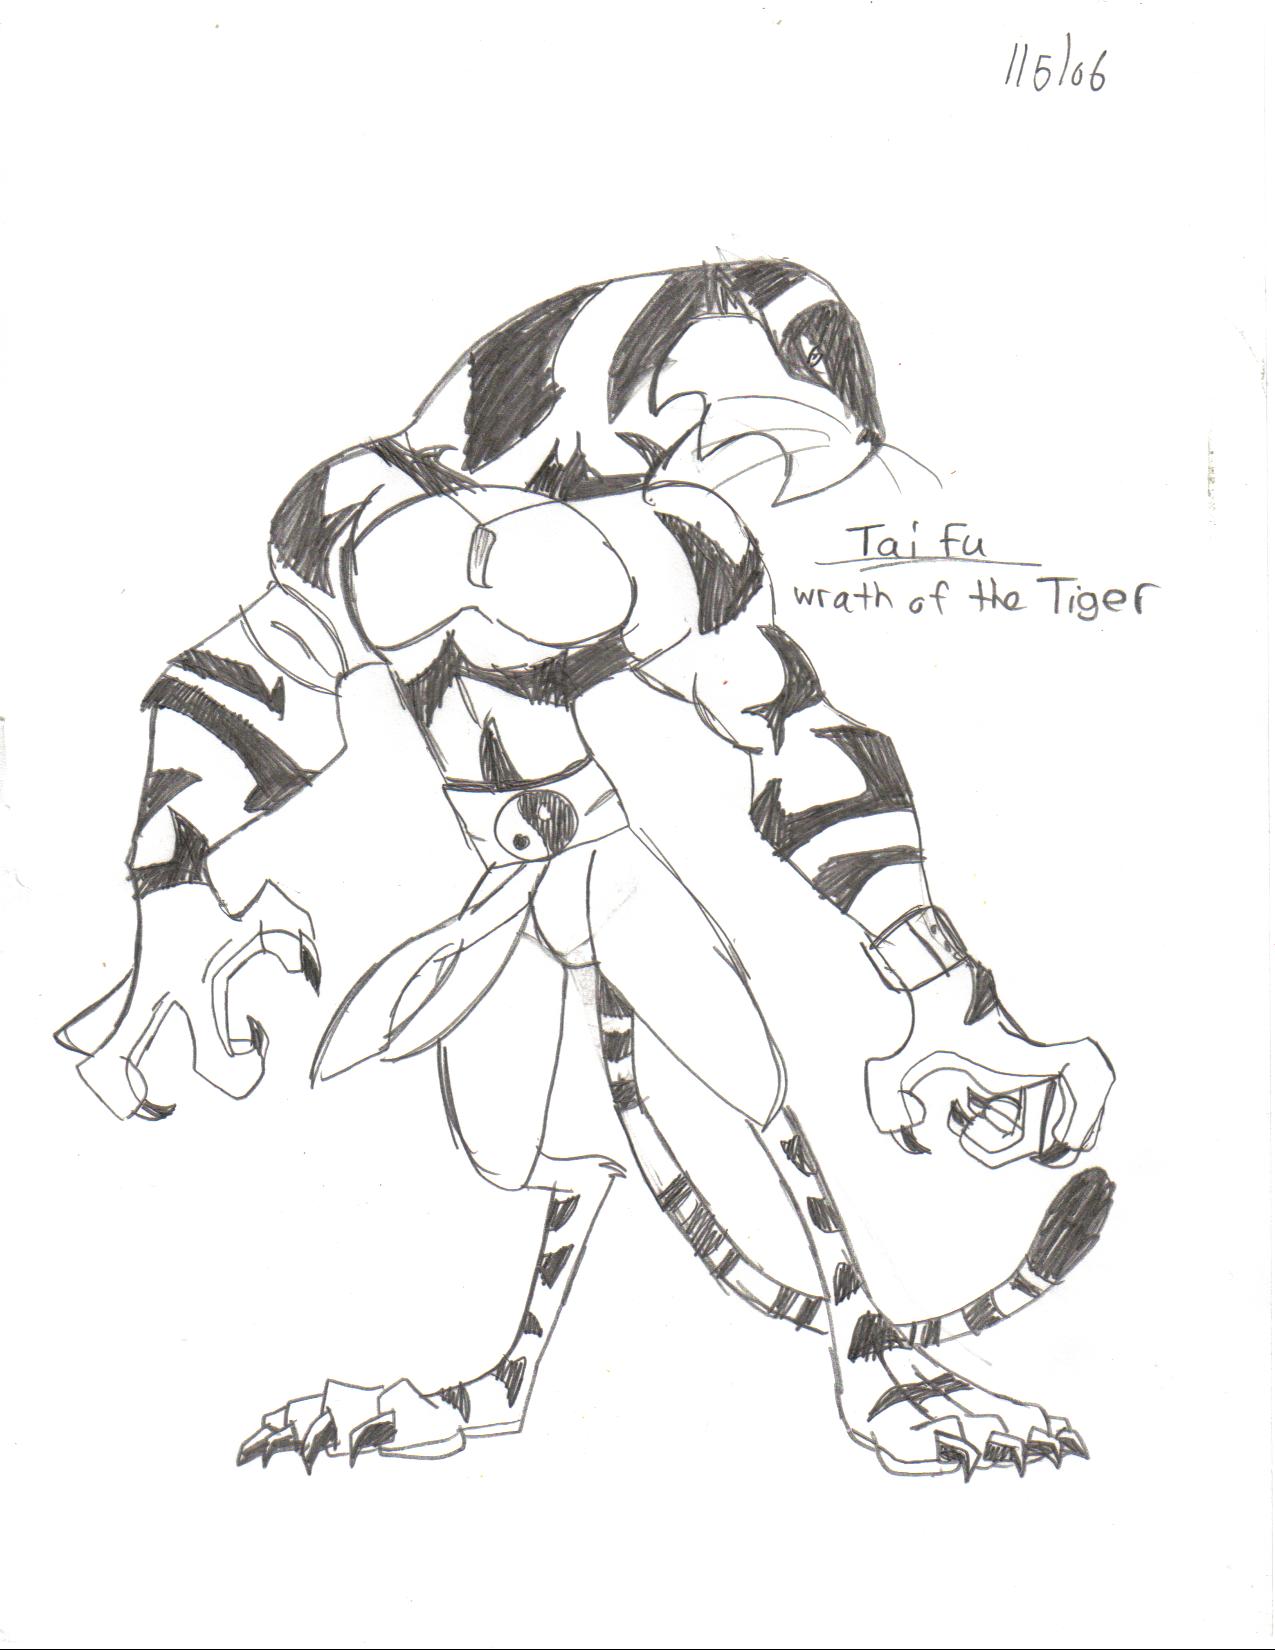 Tai Fu wrath of the tiger by crocdragon89